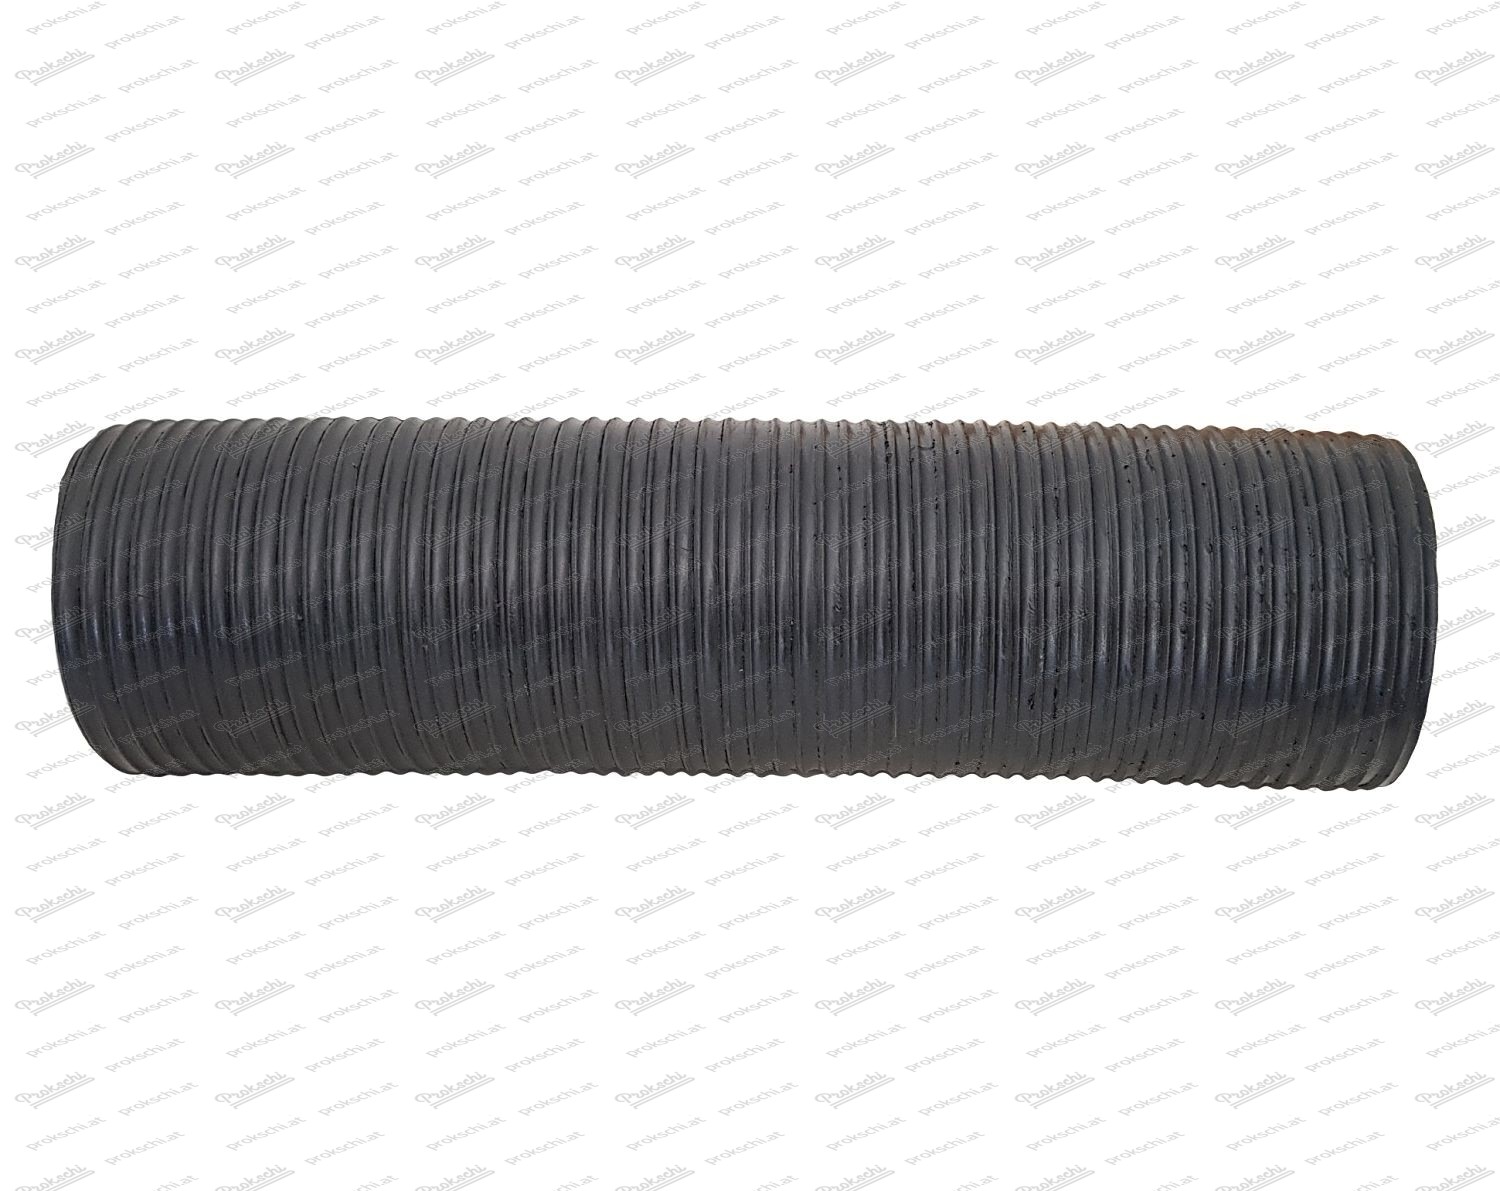 Lüfter / Gebläseschlauchgummi Ø 130 mm 